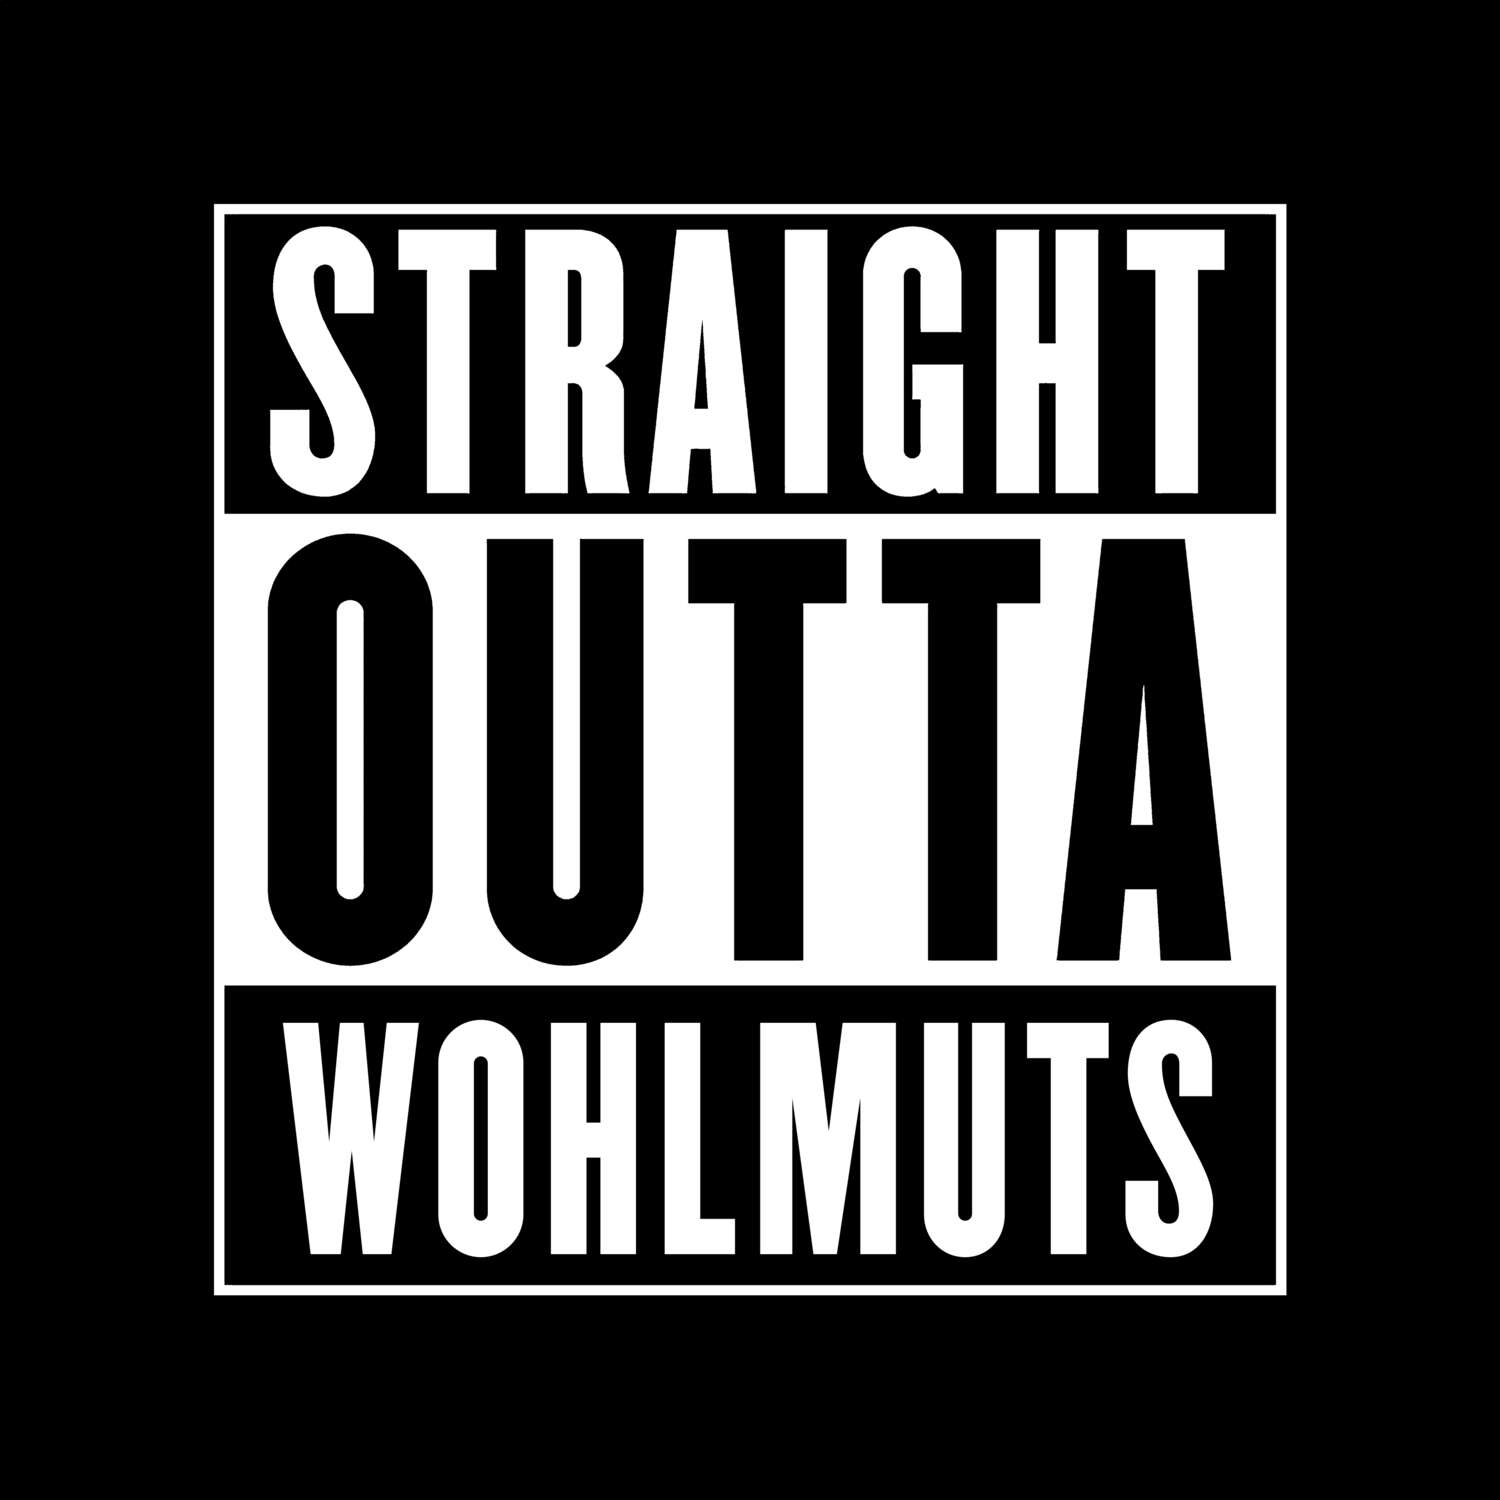 Wohlmuts T-Shirt »Straight Outta«